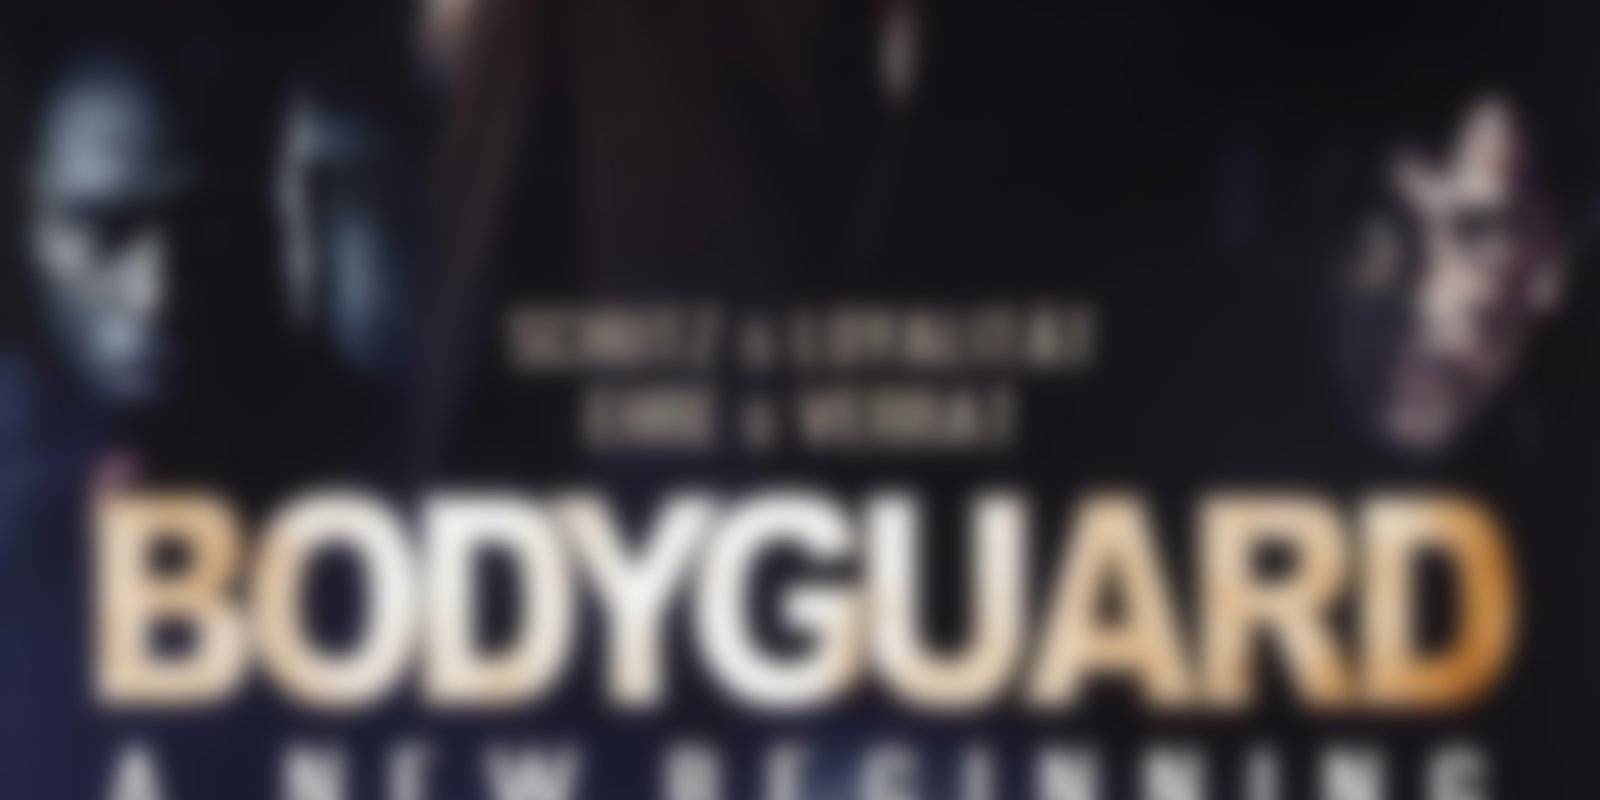 Bodyguard: A New Beginning (2008) dvd movie cover